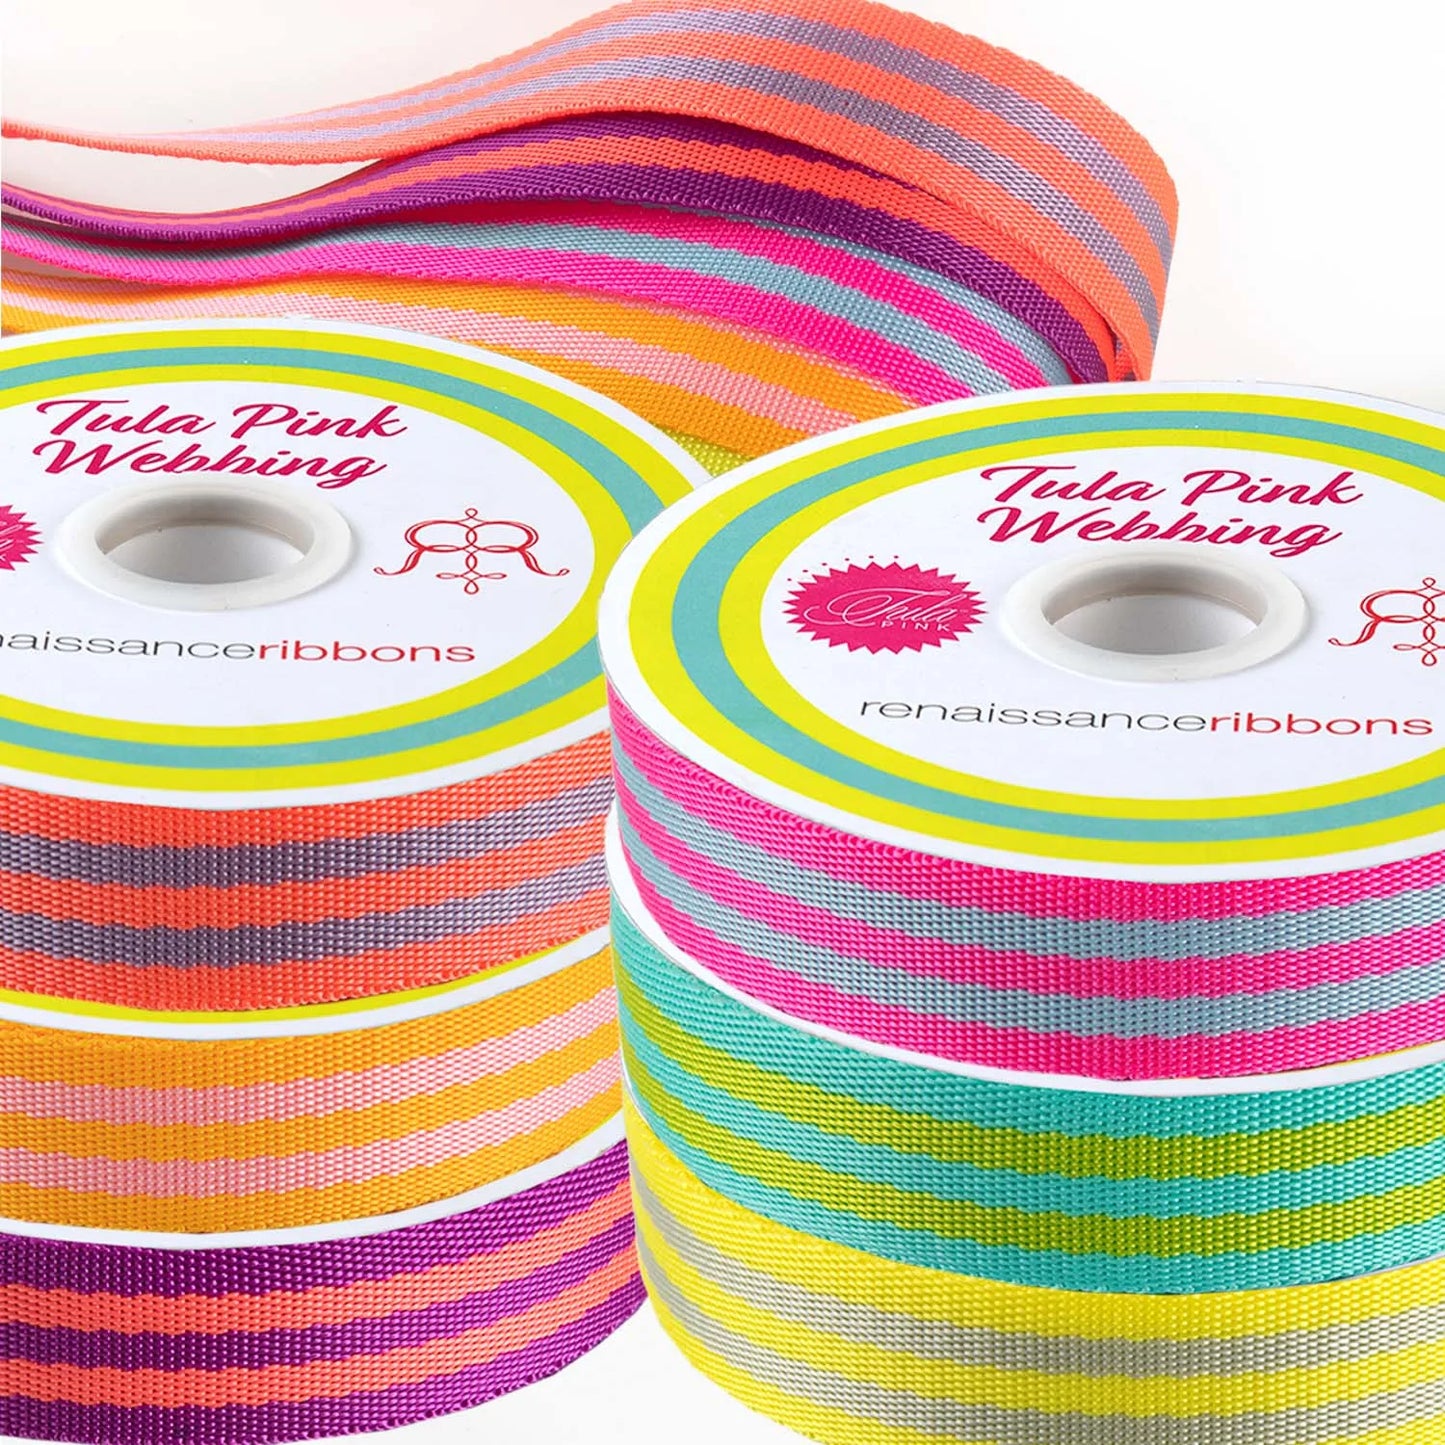 Tula Pink Nylon Webbing Lavender/Pink 1" TKS-91/1" Col 06 Priced per yard